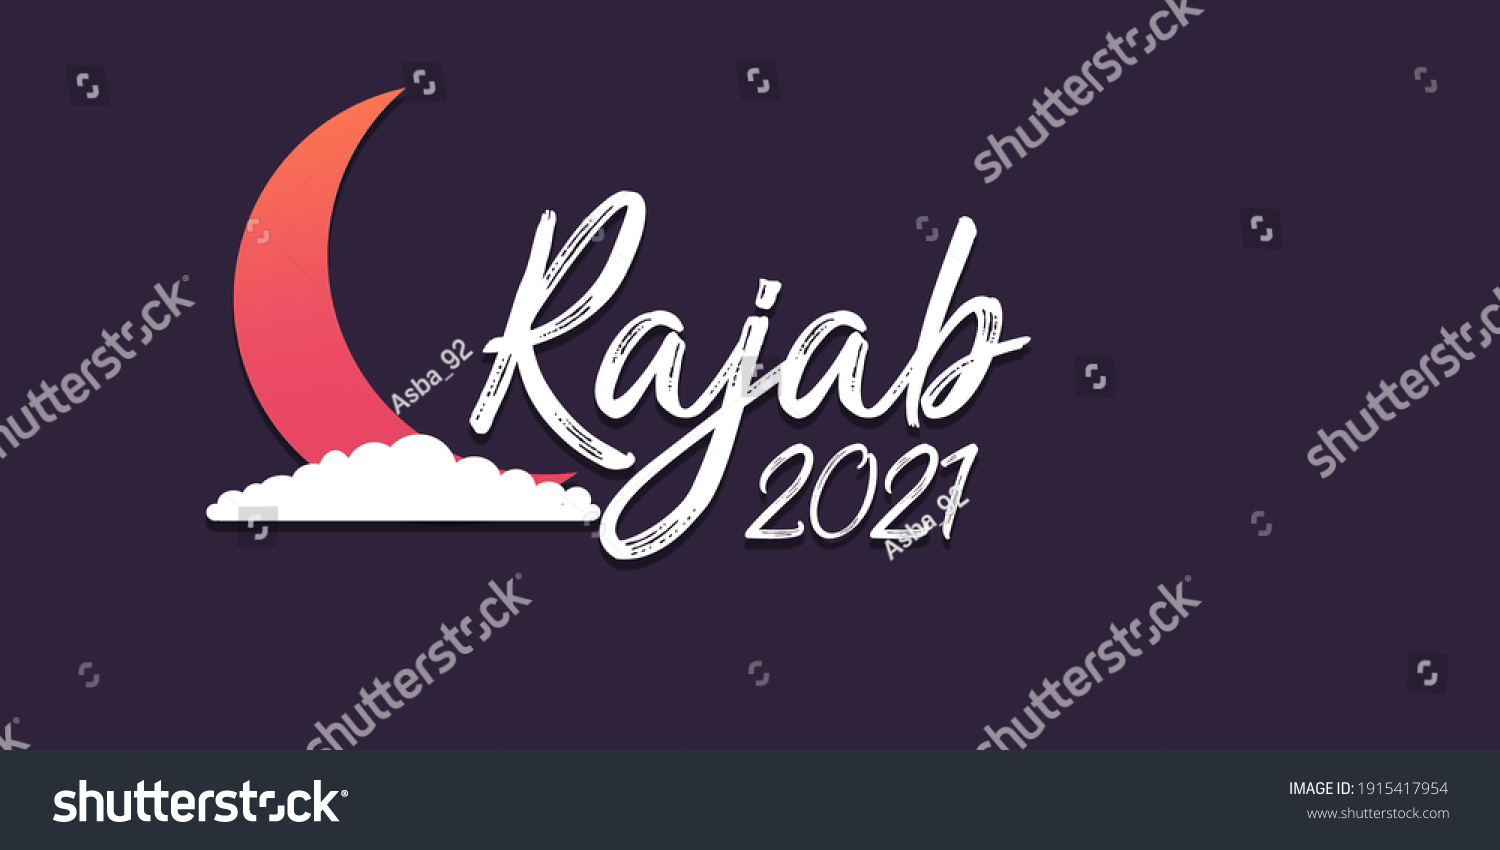 Rajab 2021 is the month islamic hijri calendar Royalty Free Stock